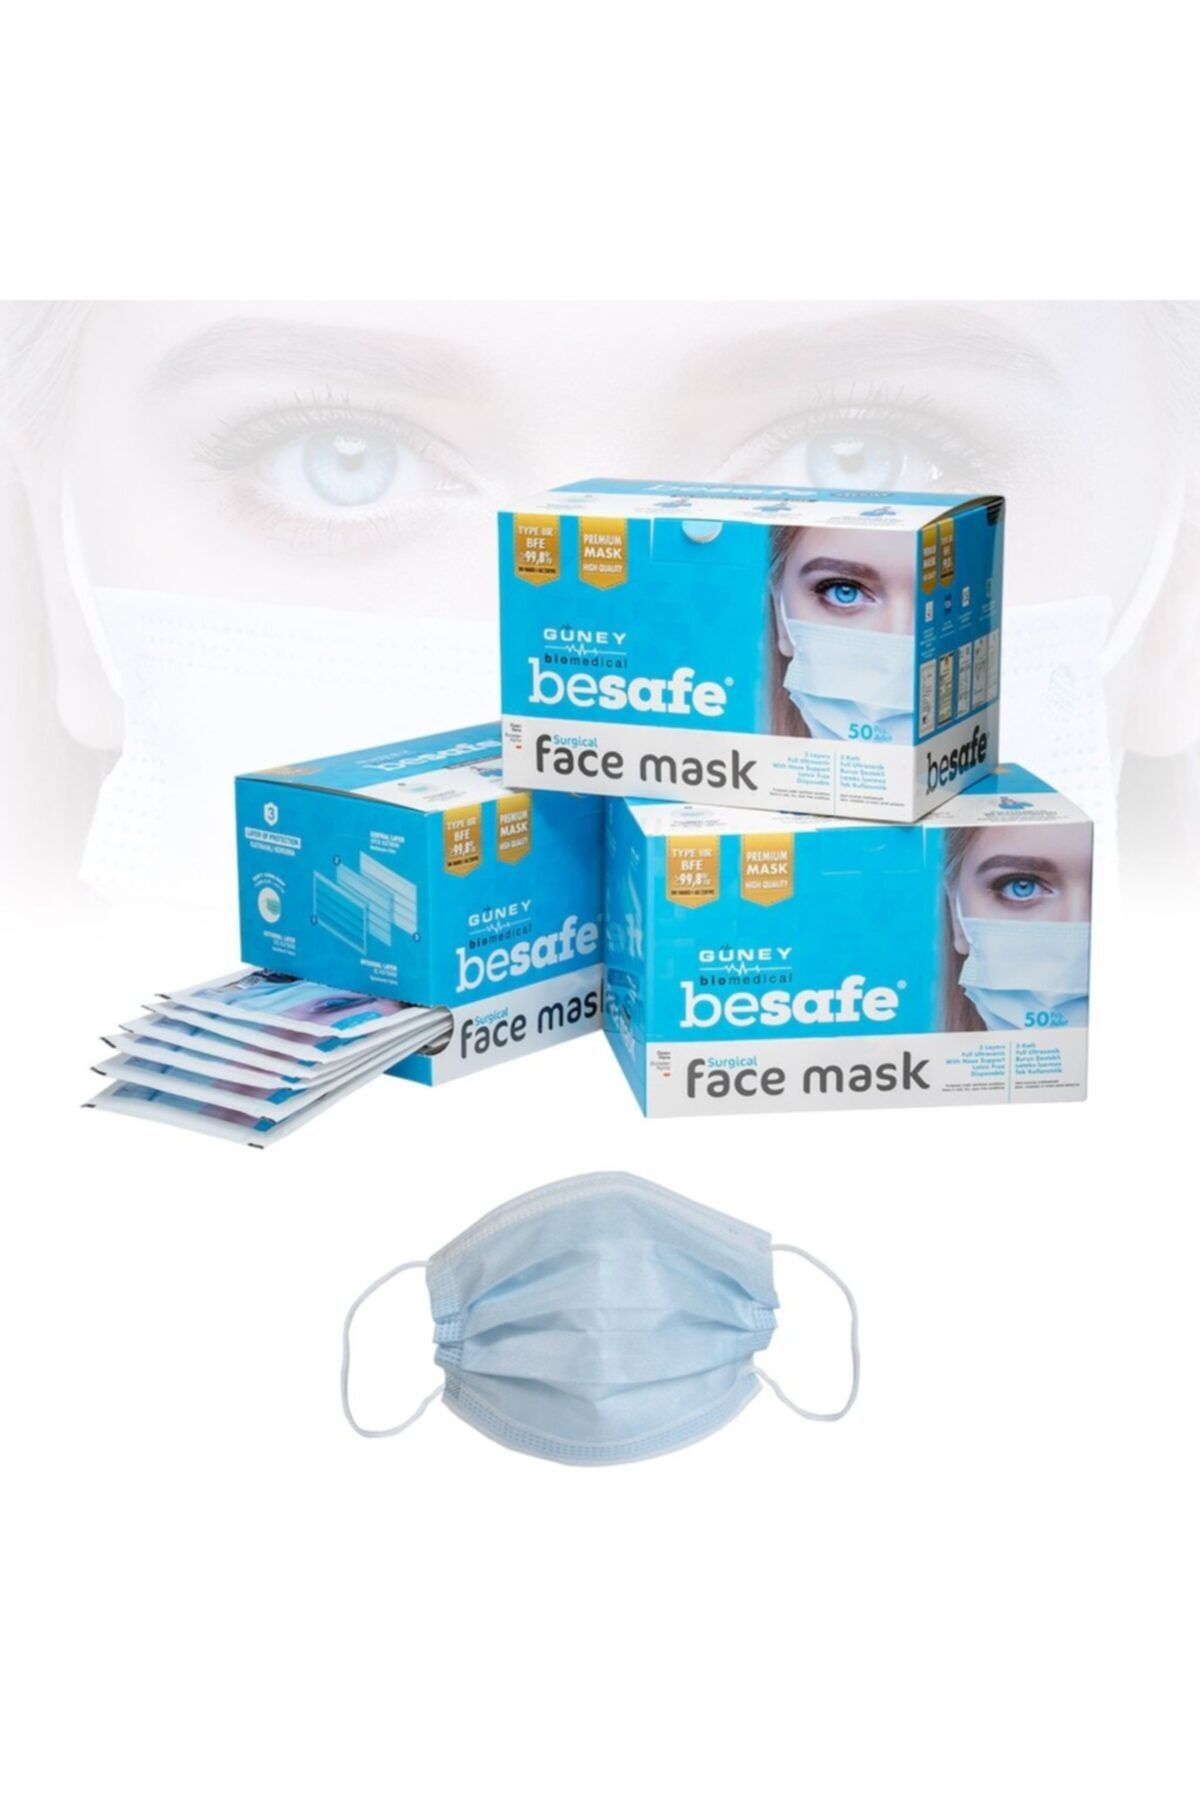 Besafe Güney Biyomedikal Tekli Ambalaj Premium Kutu Cerrahi Maske 3 Katlı Mb 150 Adet